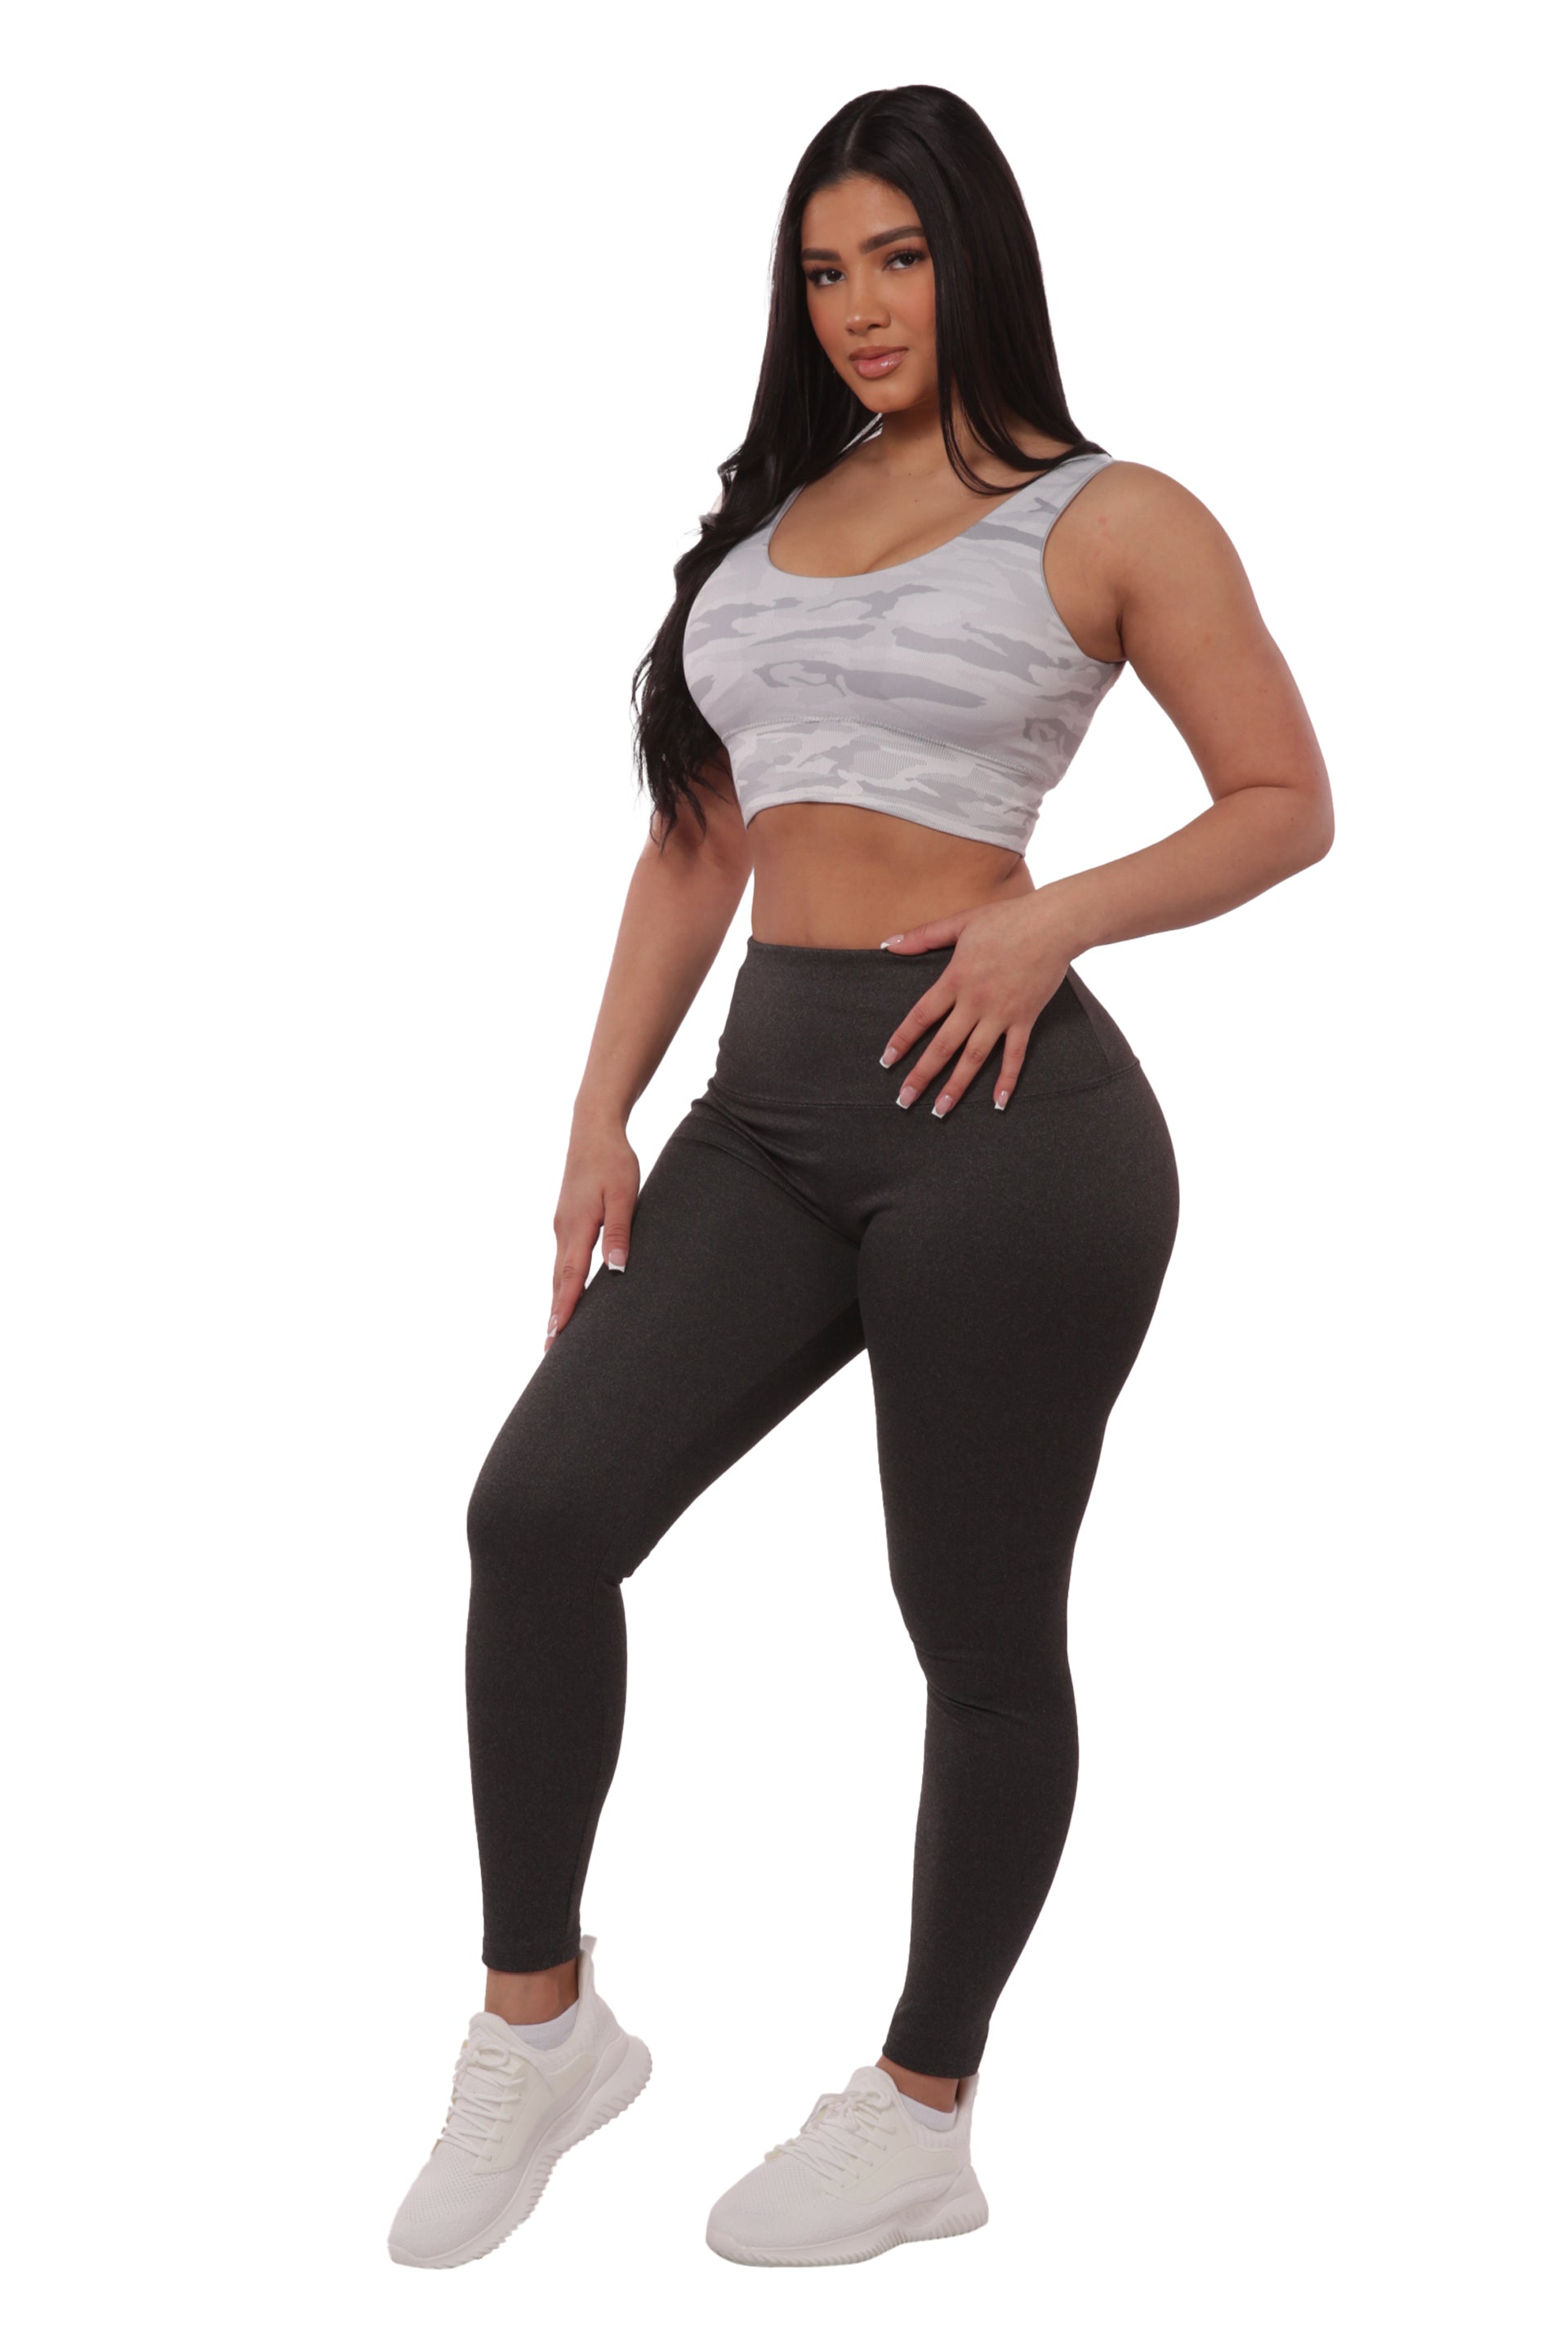 Wholesale Womens High Waist Tummy Control Sports Leggings - Charcoal - S&G Apparel